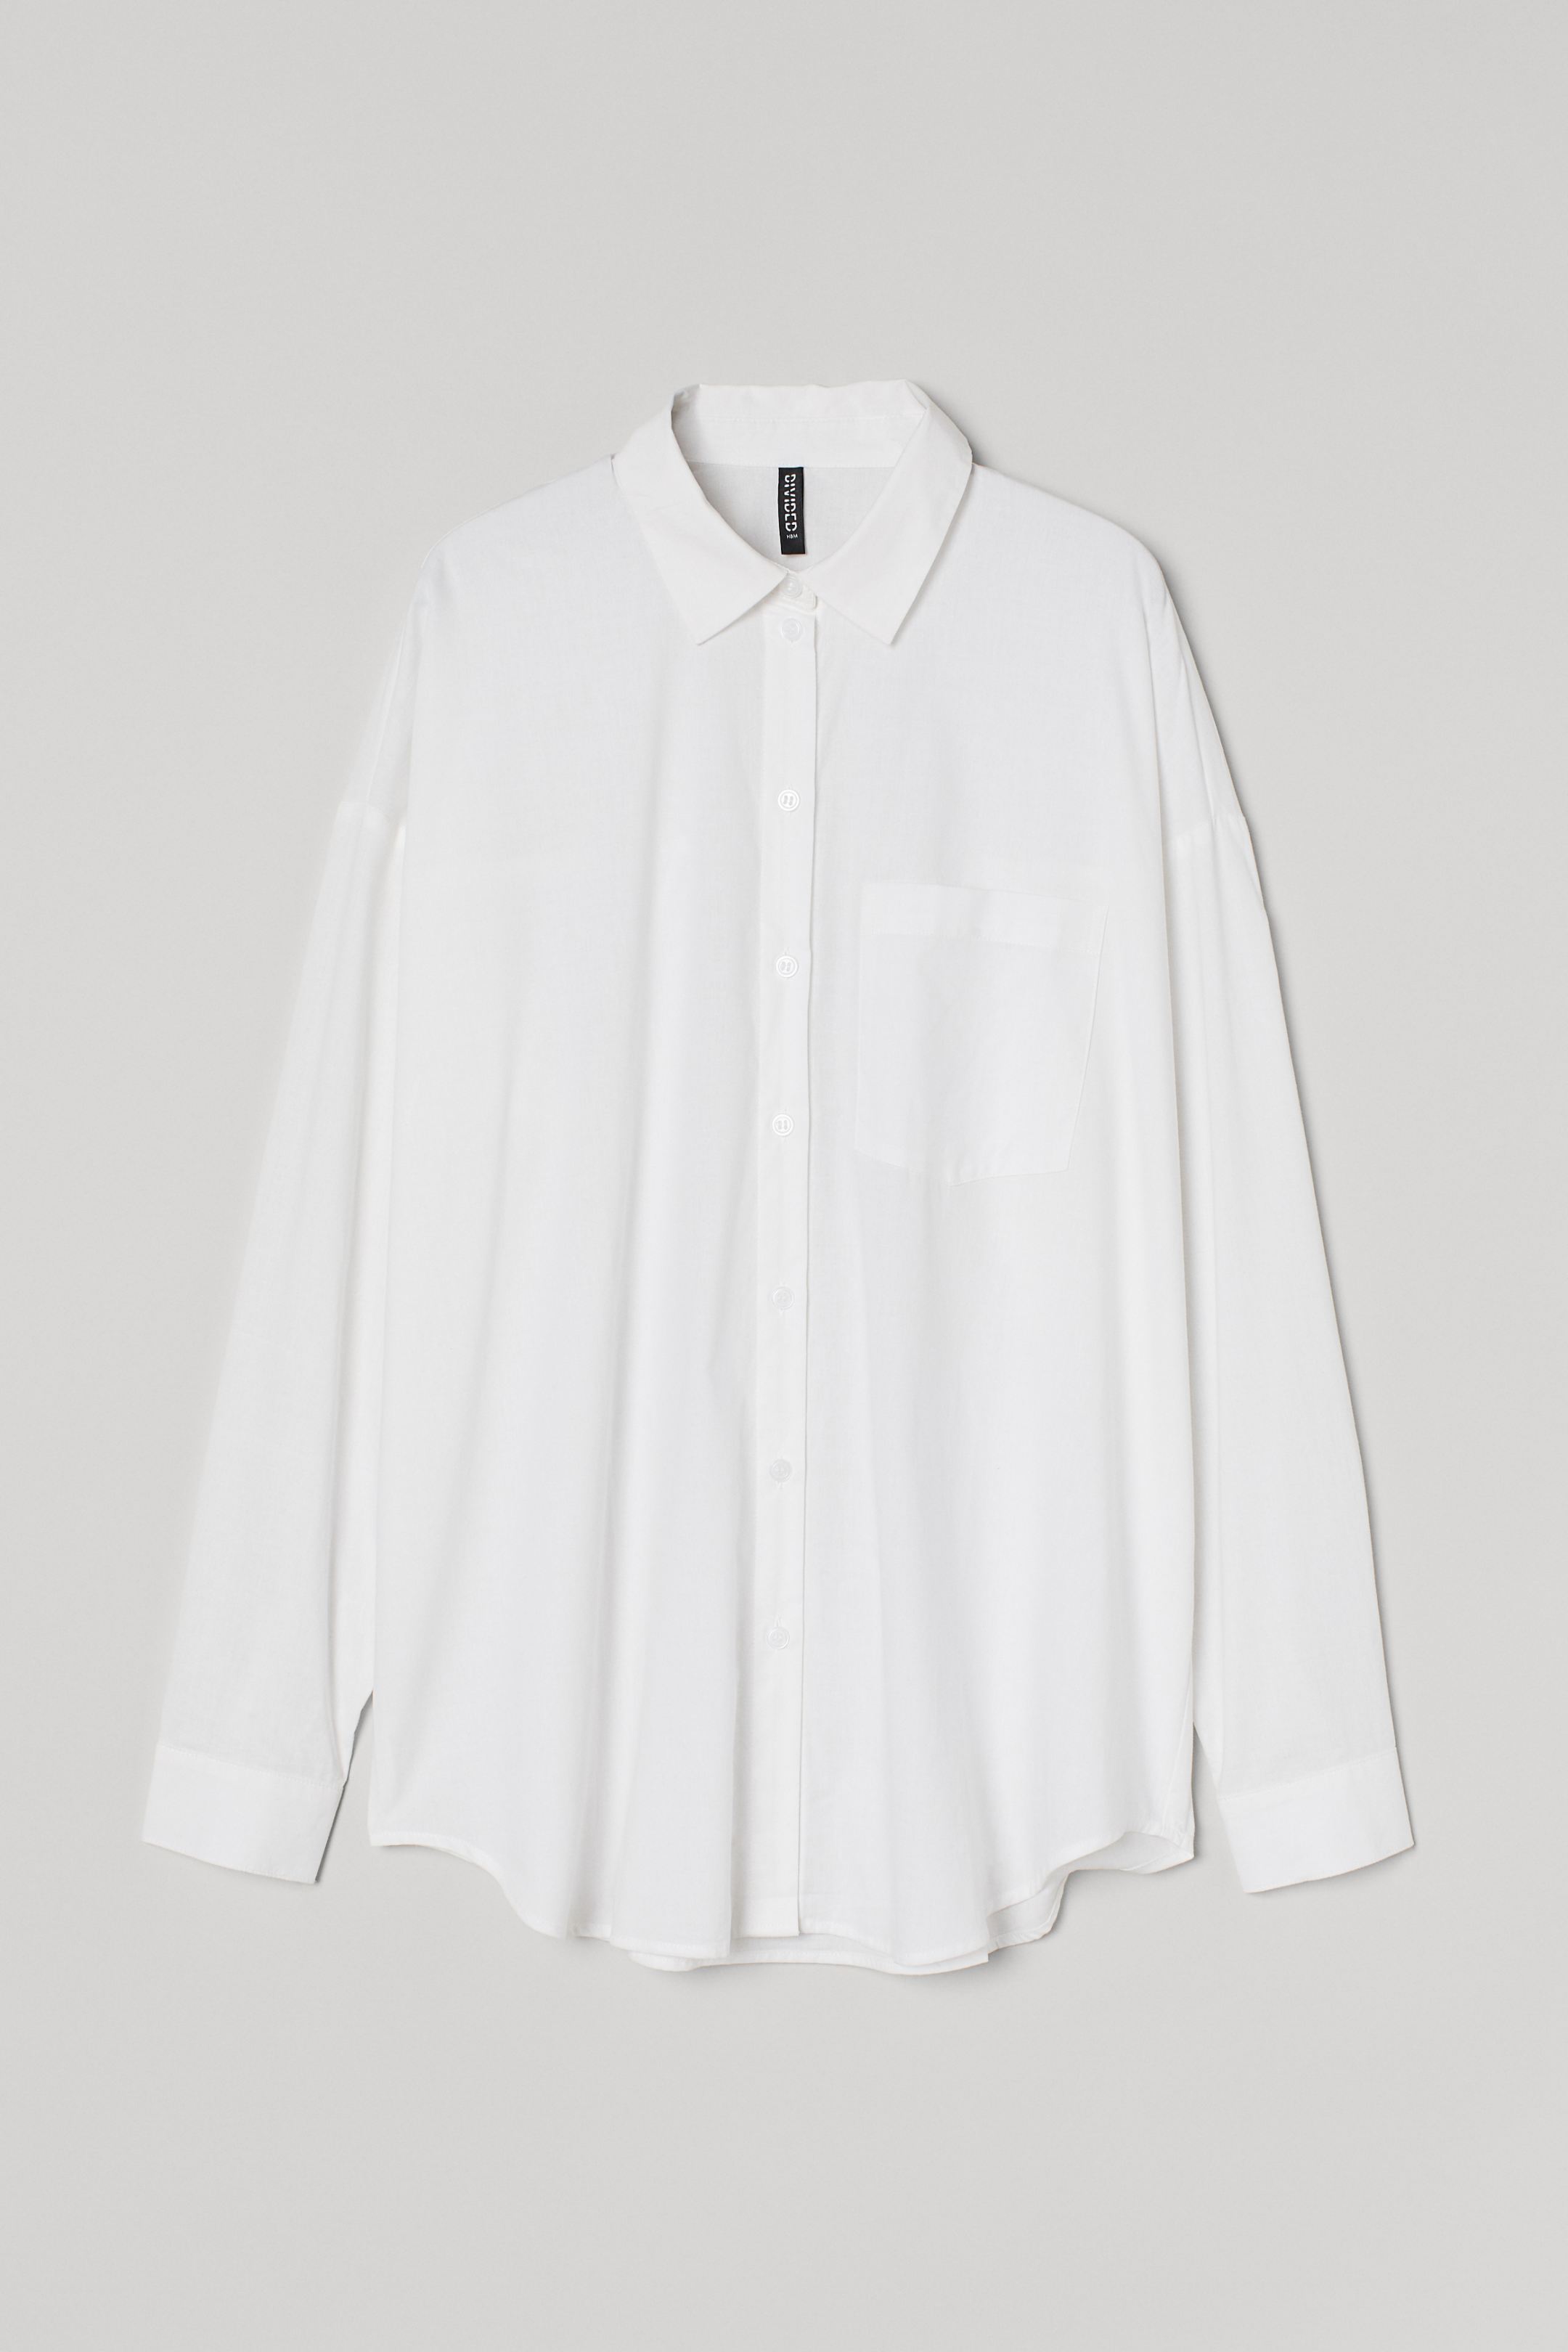 H&M Oversized Cotton Shirt